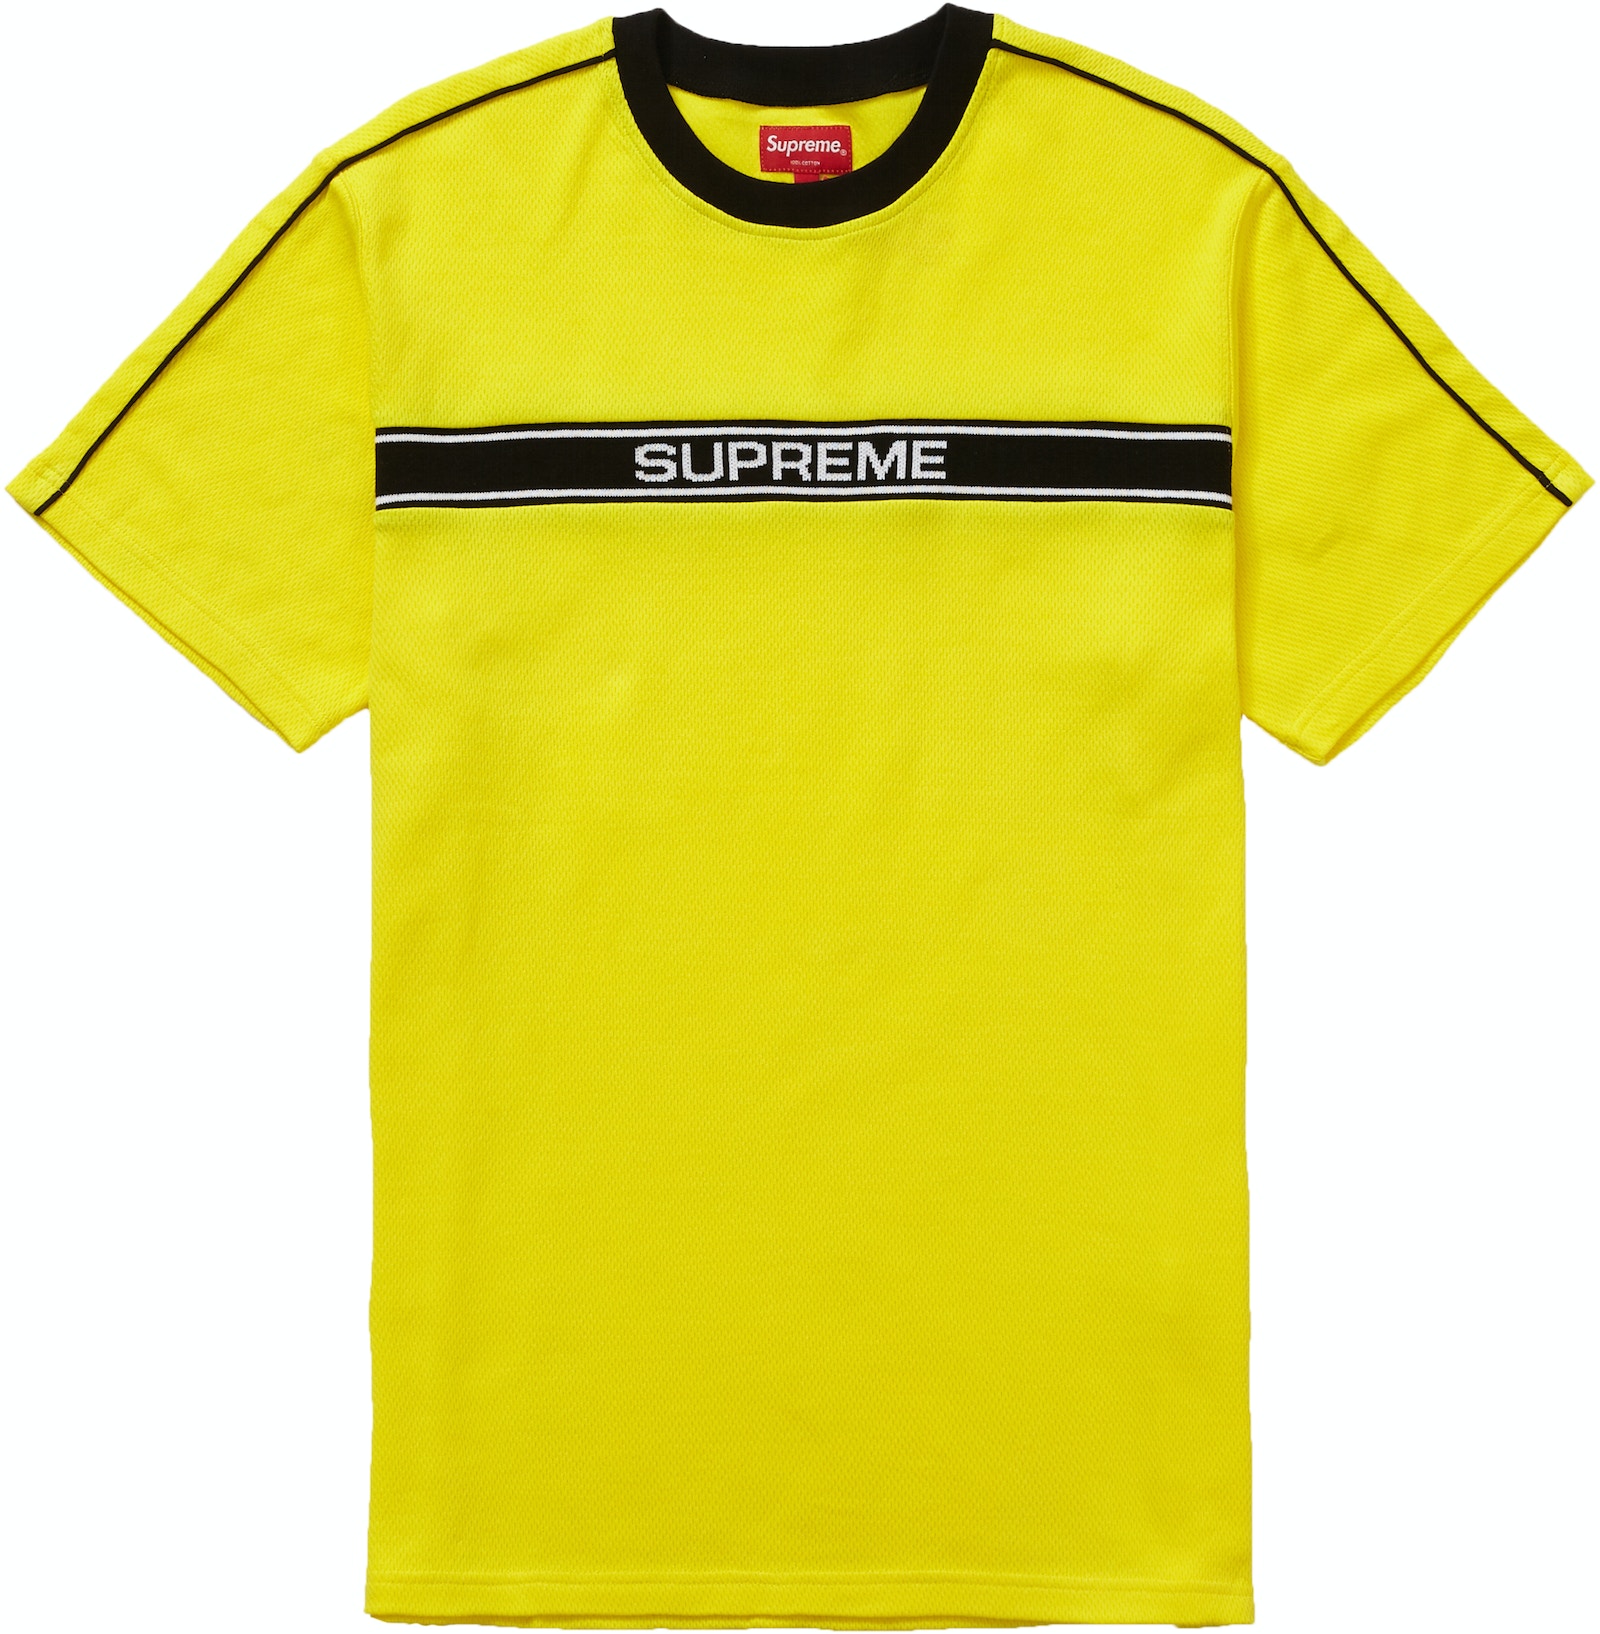 Supreme Chest Stripe Logo S/S Top Yellow - SS19